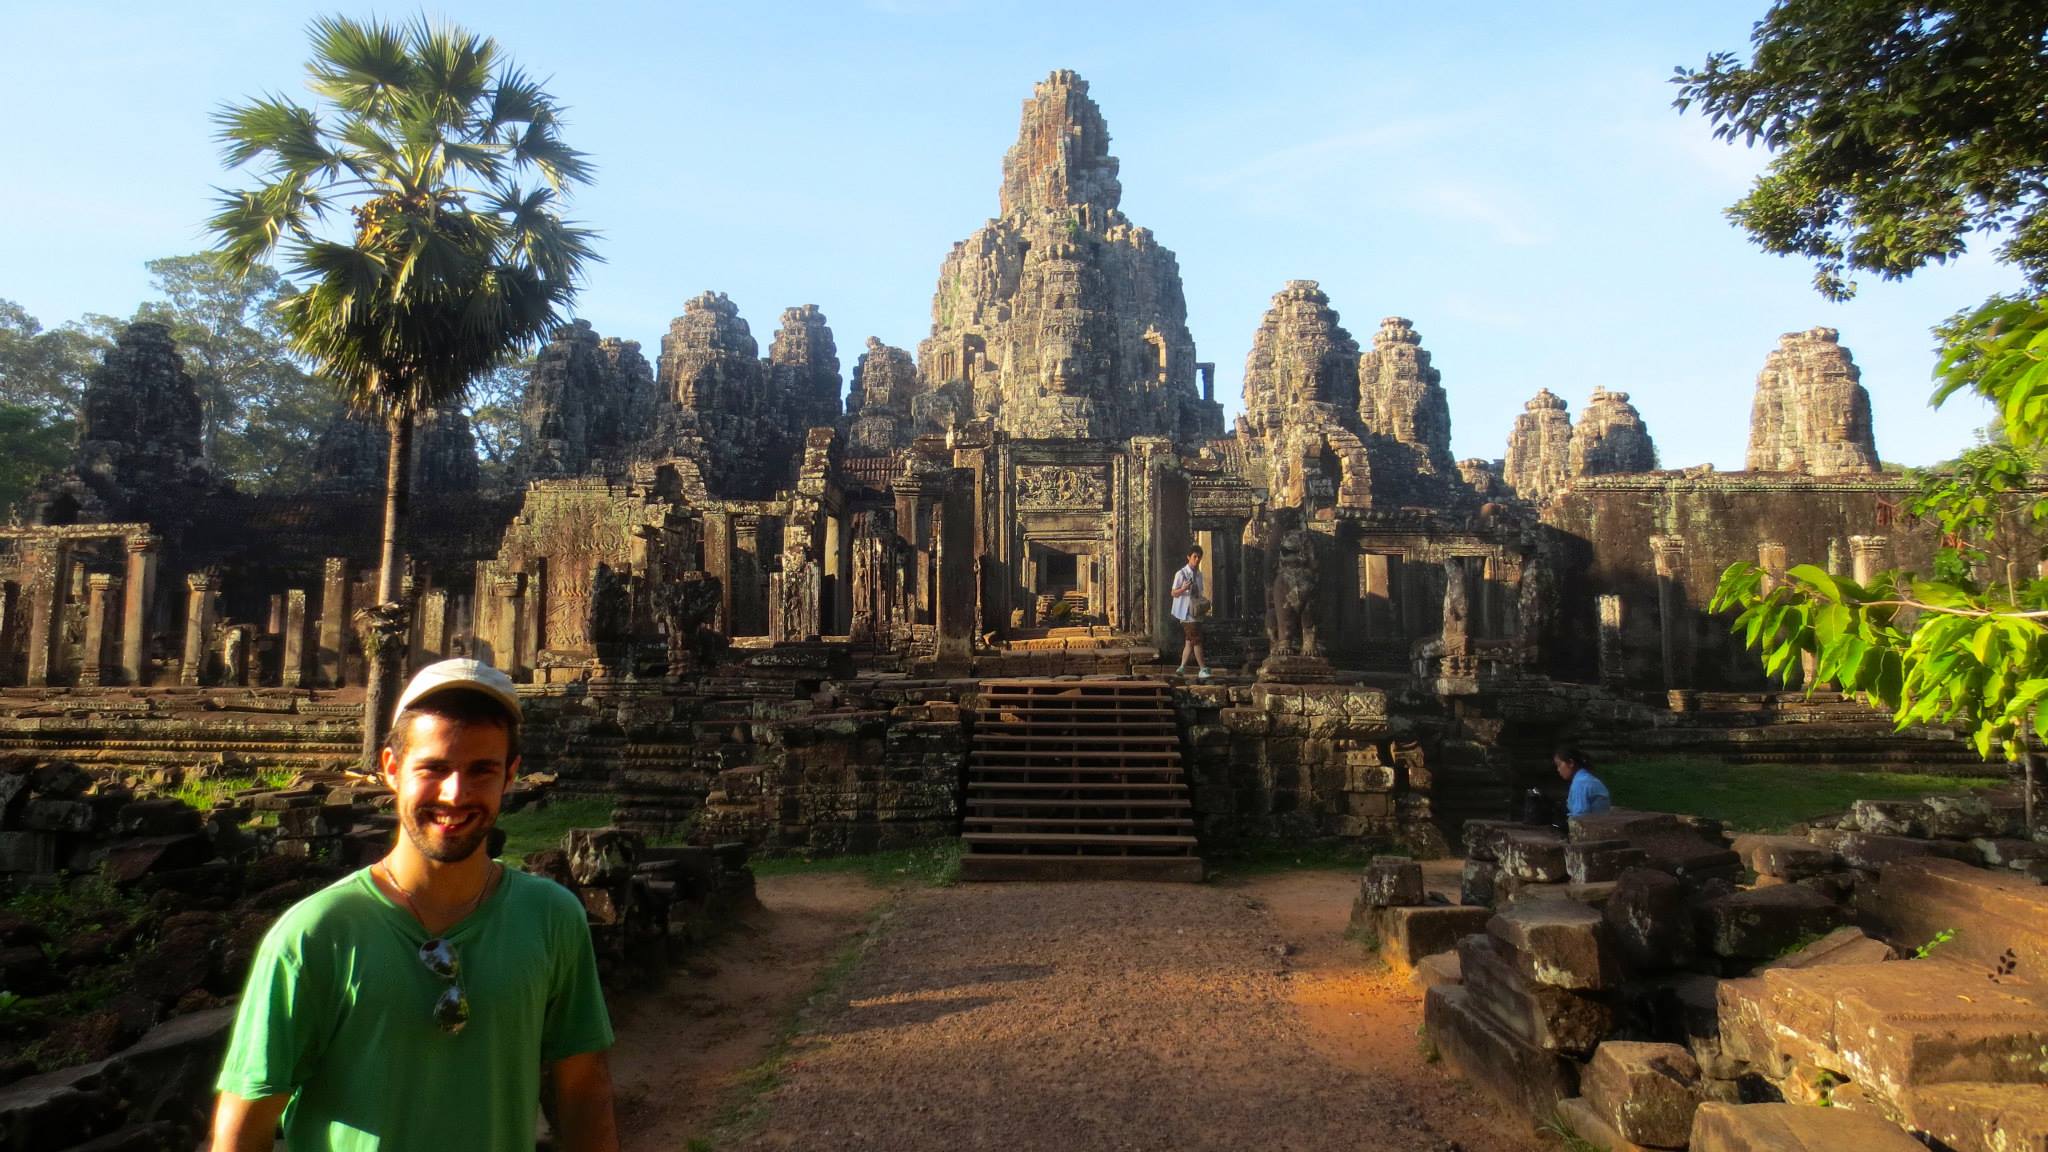 Balade au travers des temples d’Angkor